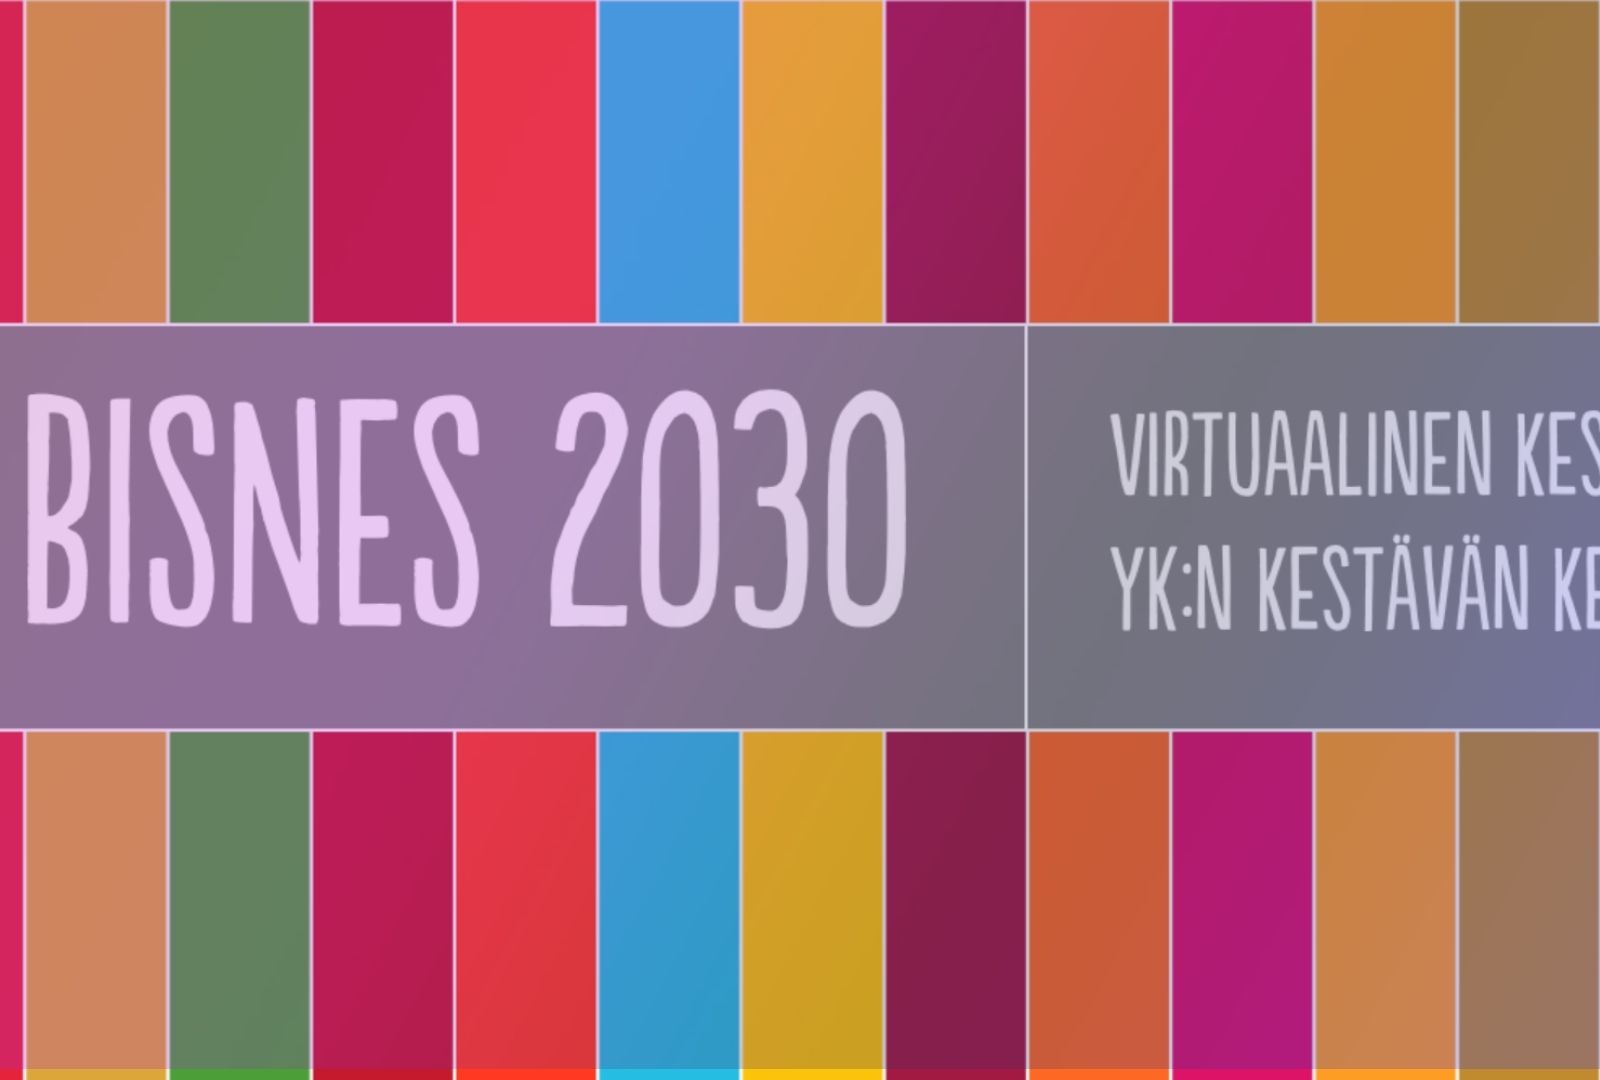 Bisnes 2030 keskustelufoorumi